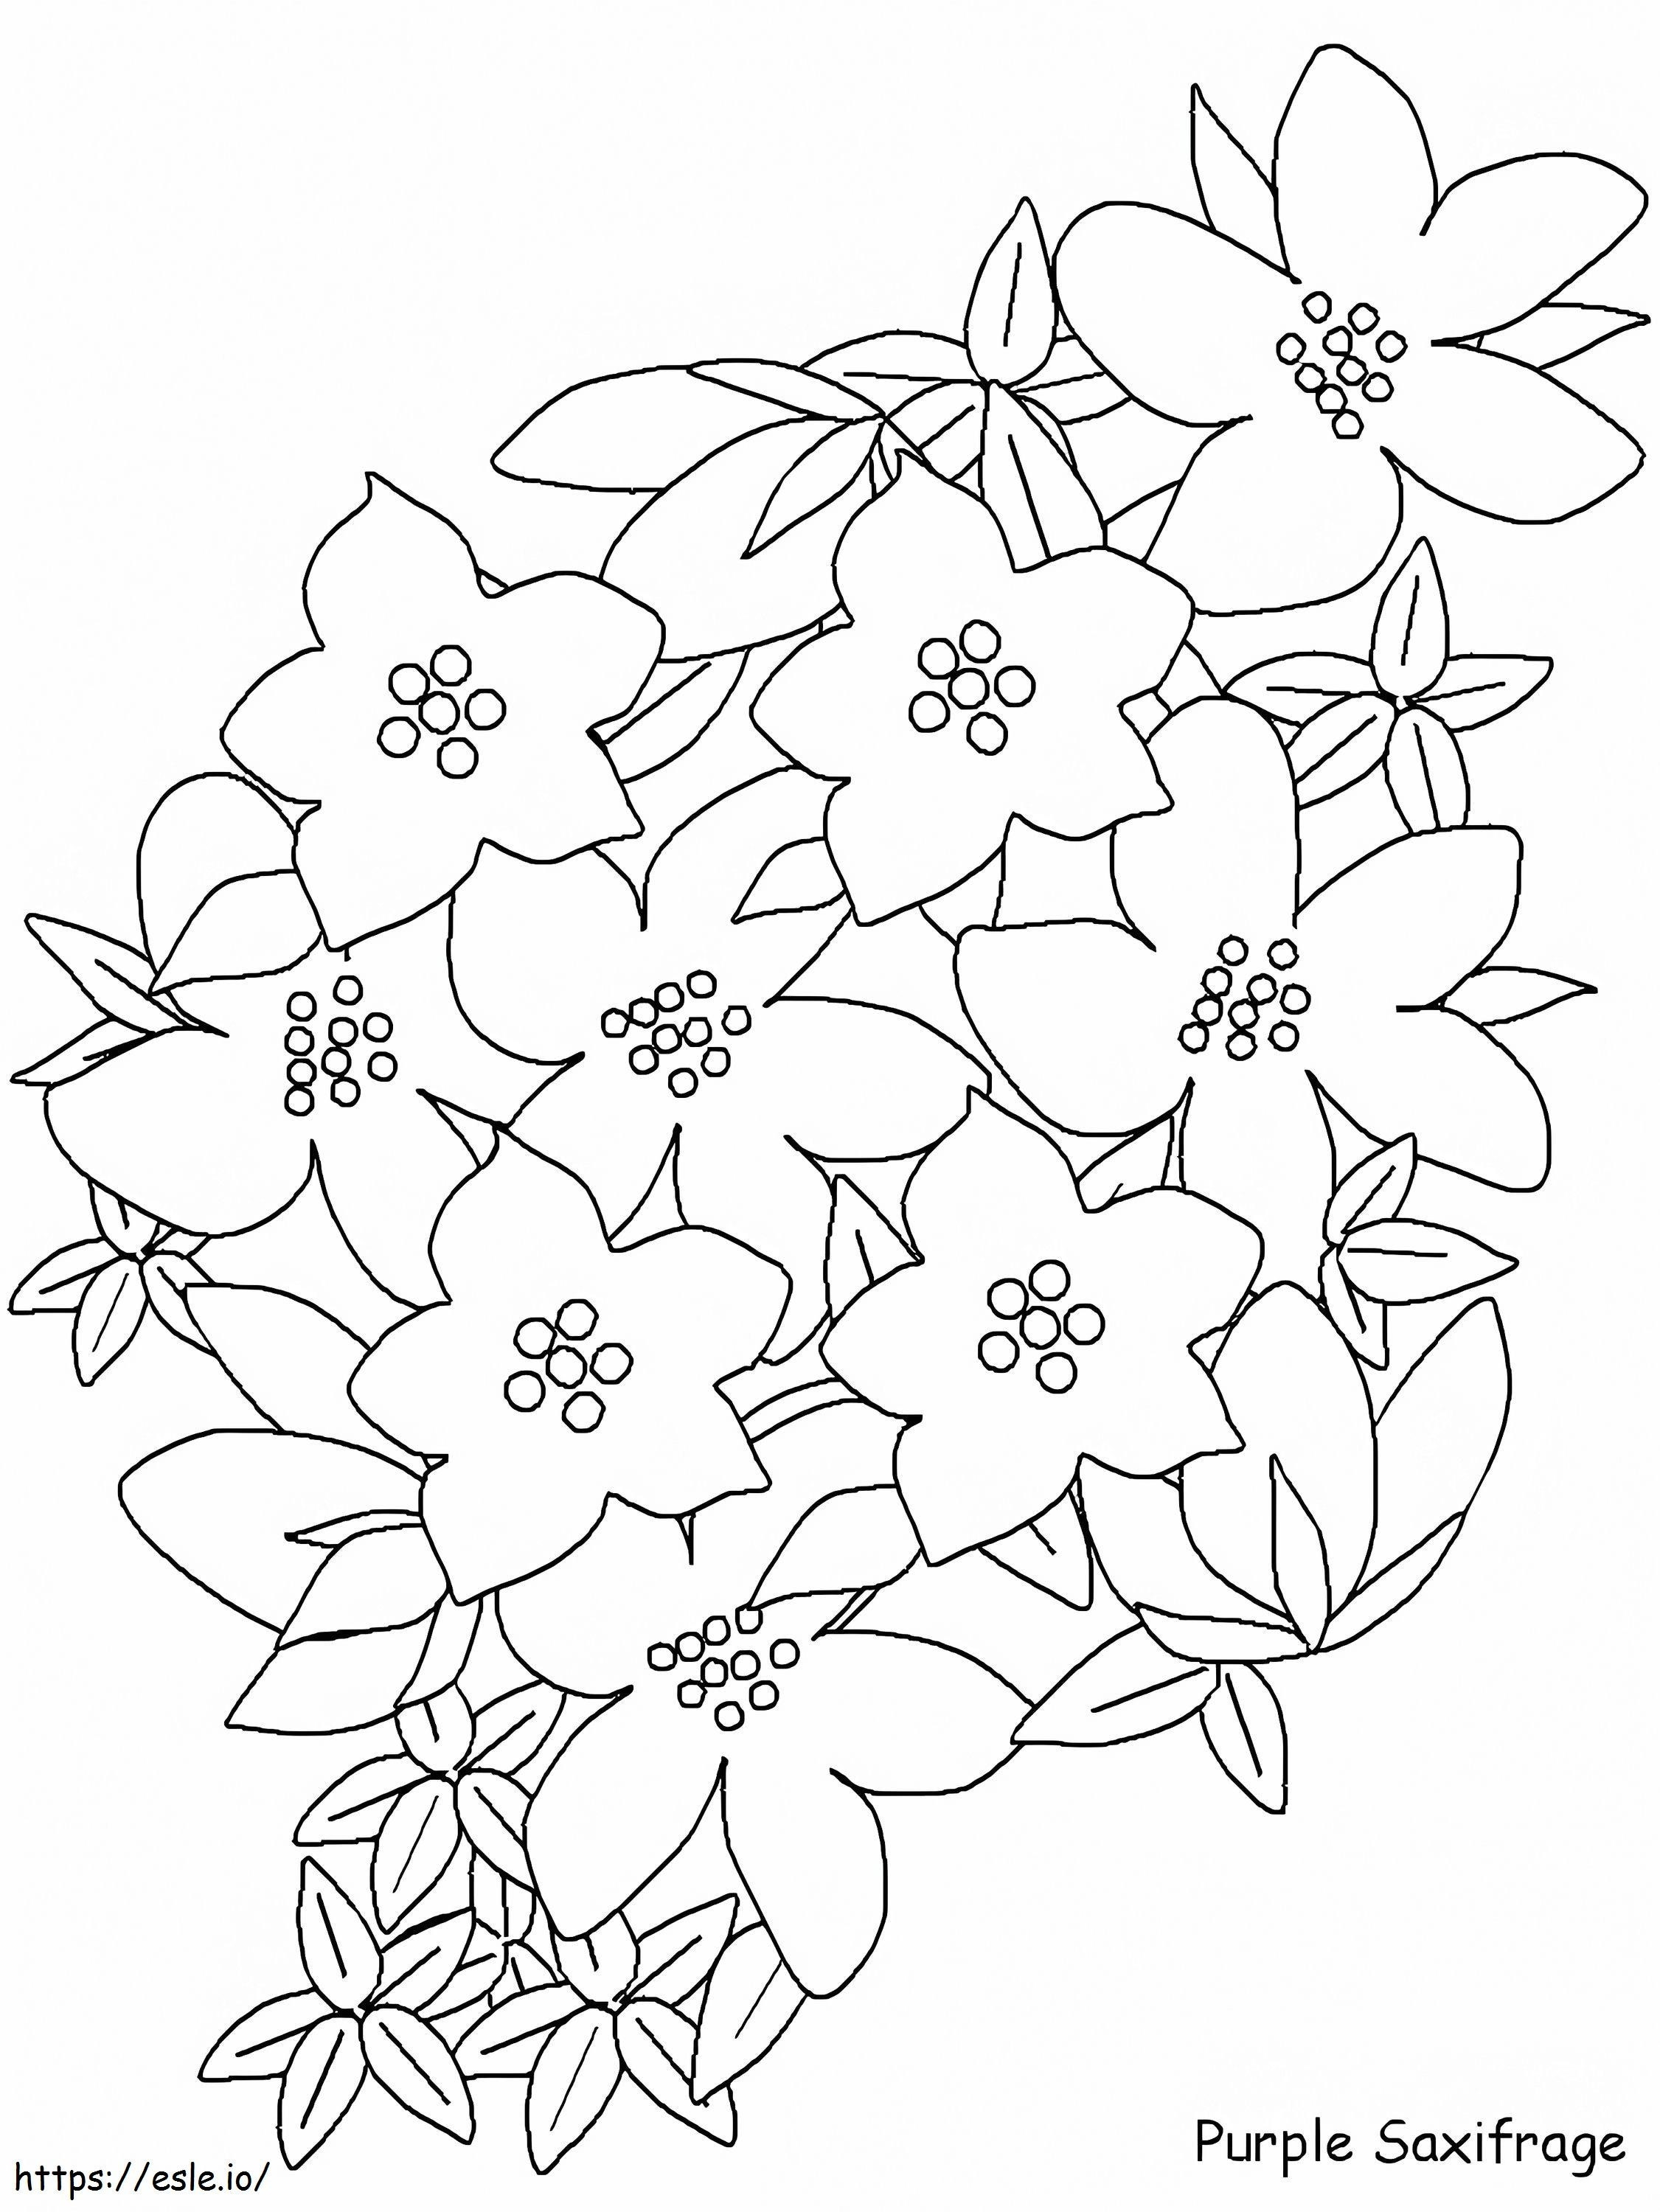 Coloriage  Purplesaxifragea4 à imprimer dessin